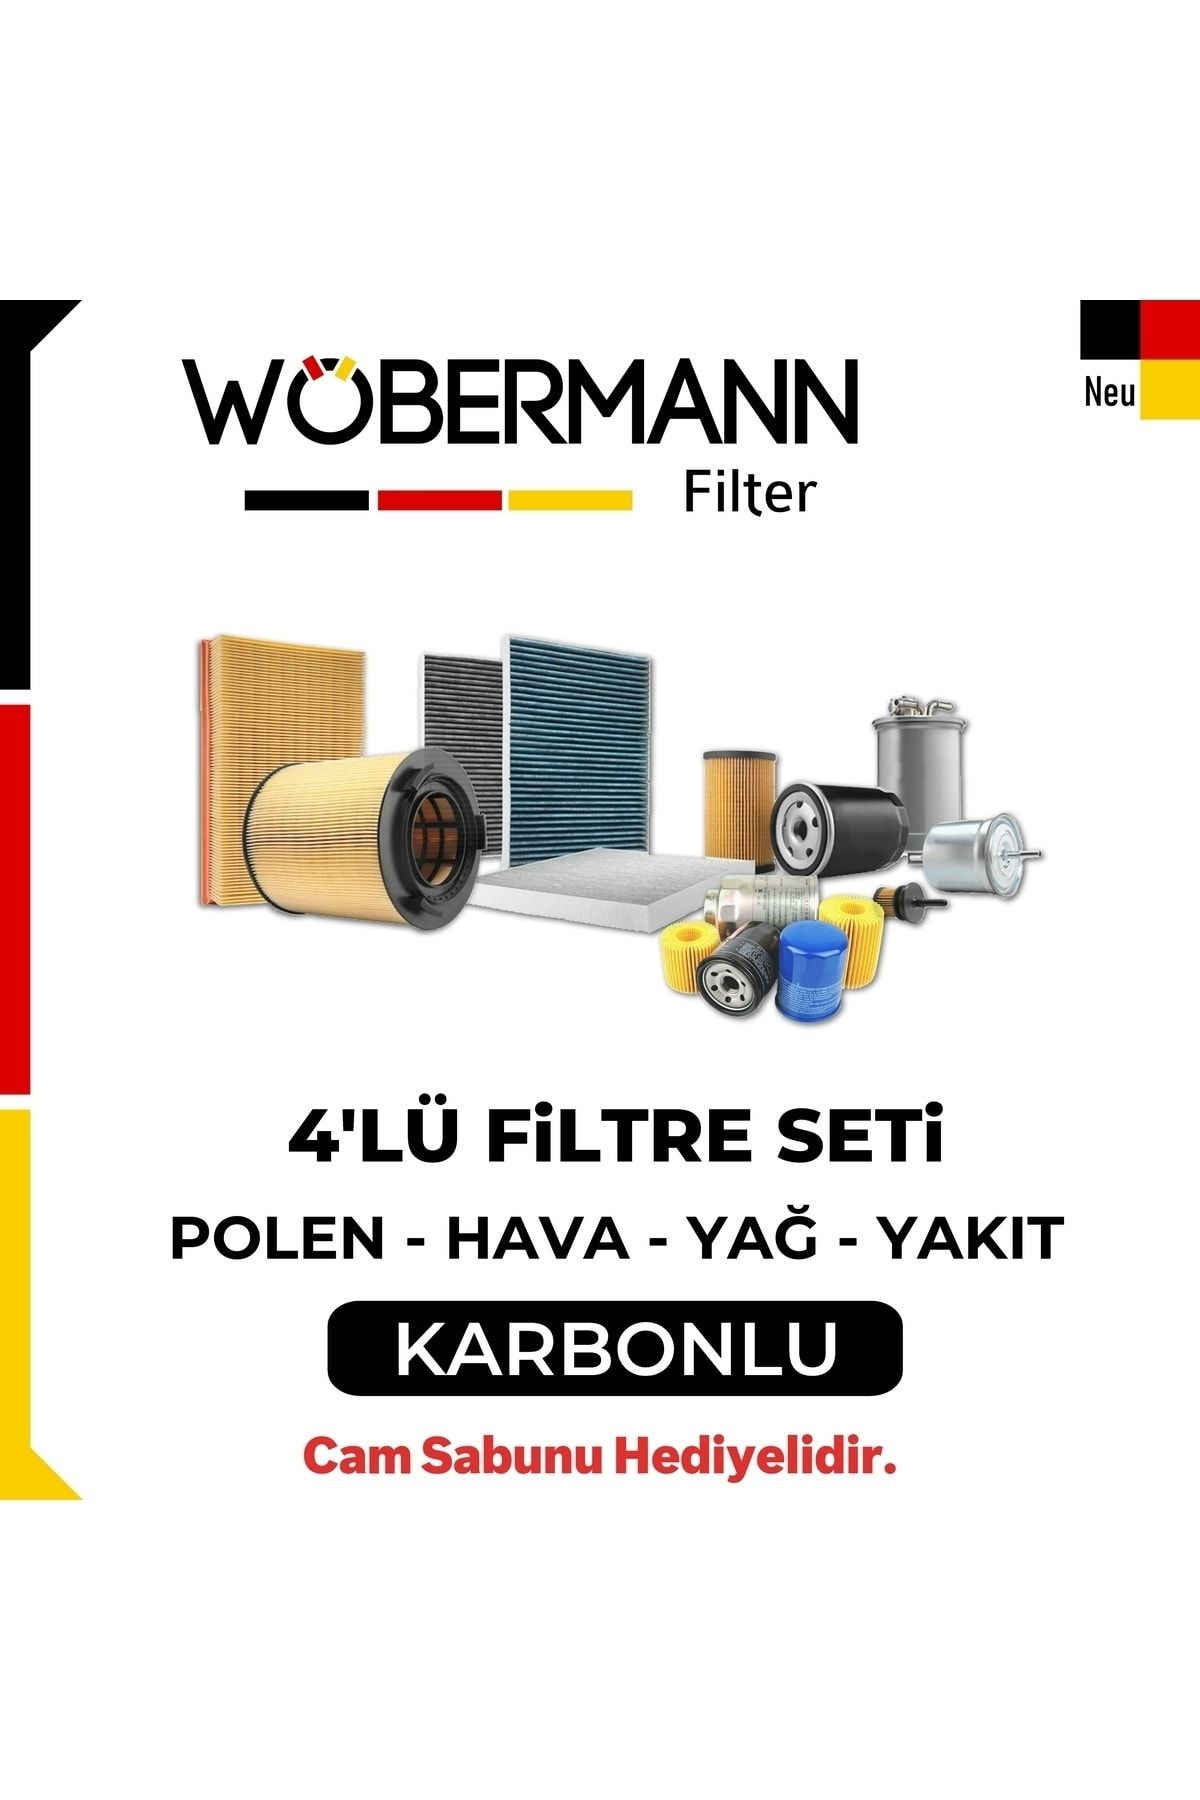 Wöbermann Vw New Beetle 1.6 Tdı Filtre Bakım Seti 2013-2014 Cay 4lü Karbonlu